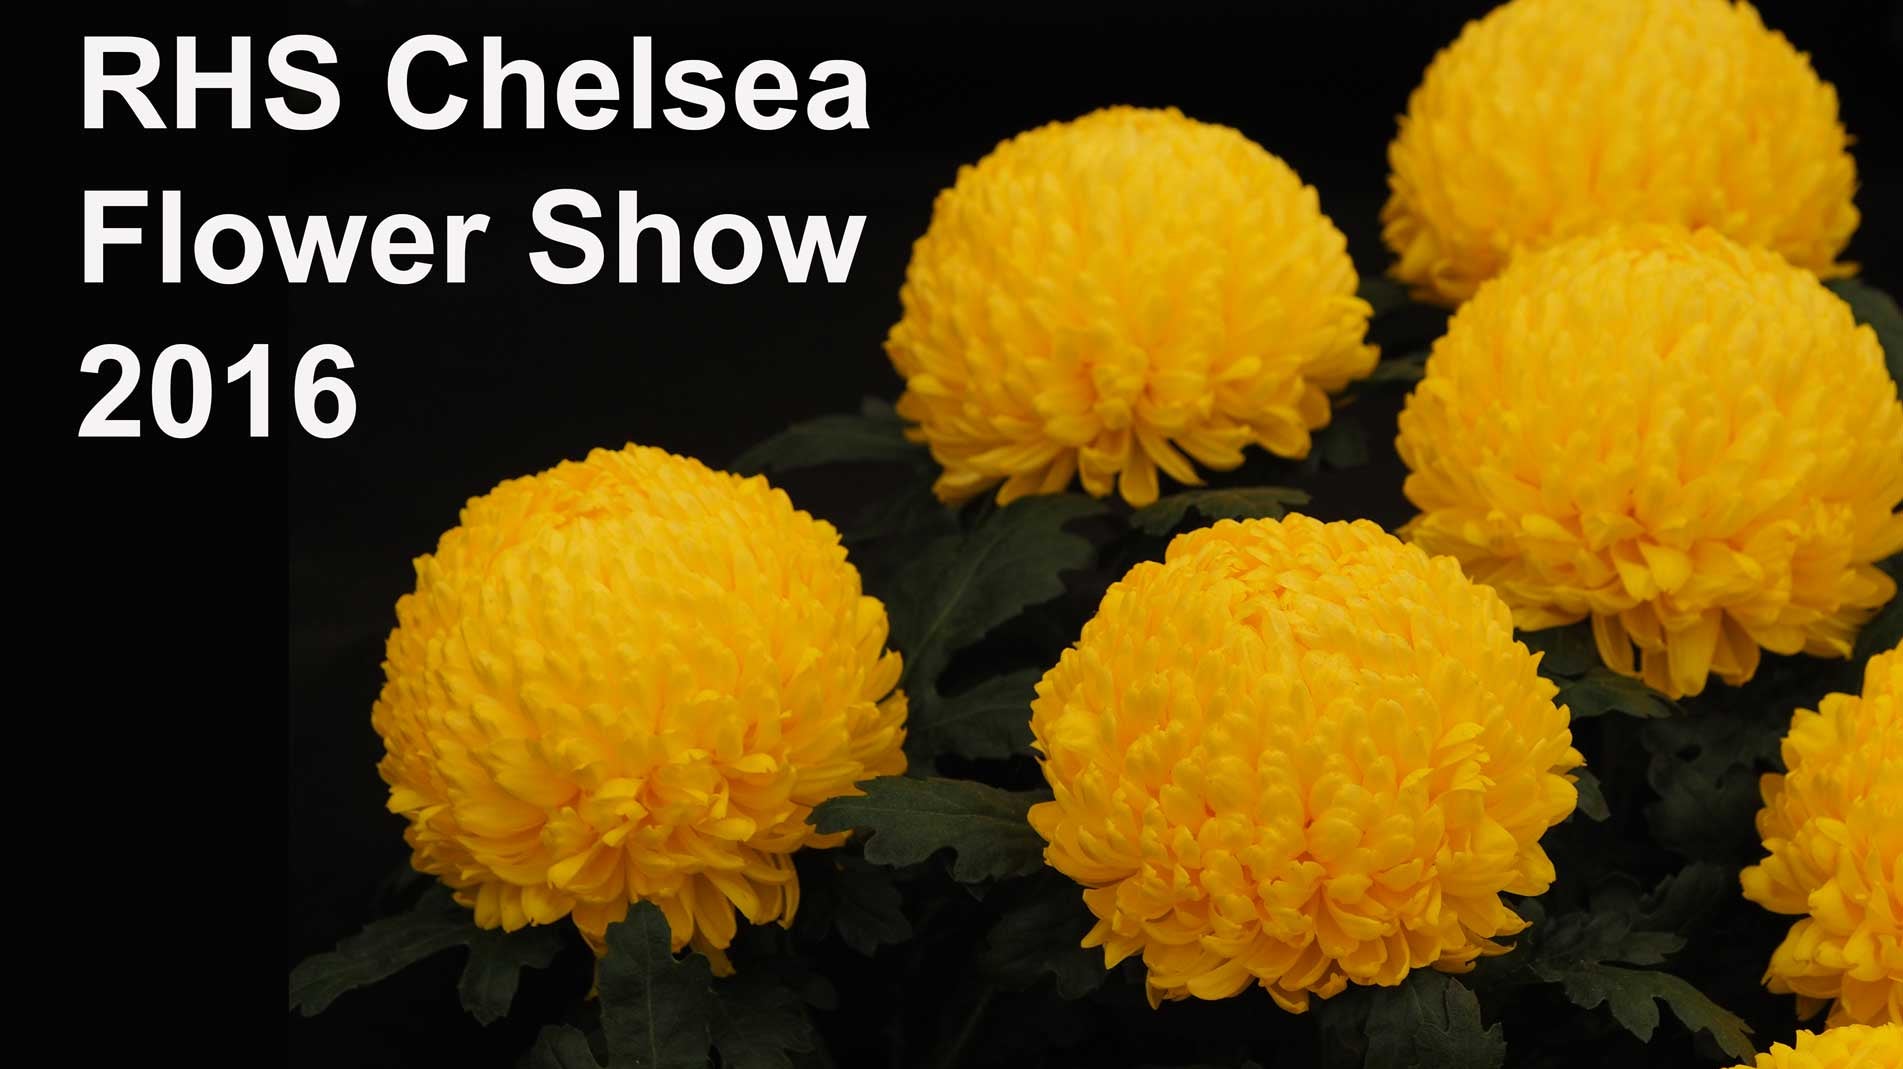 Haxnicks expert gardeners RHS Chelsea Flower Show 2016